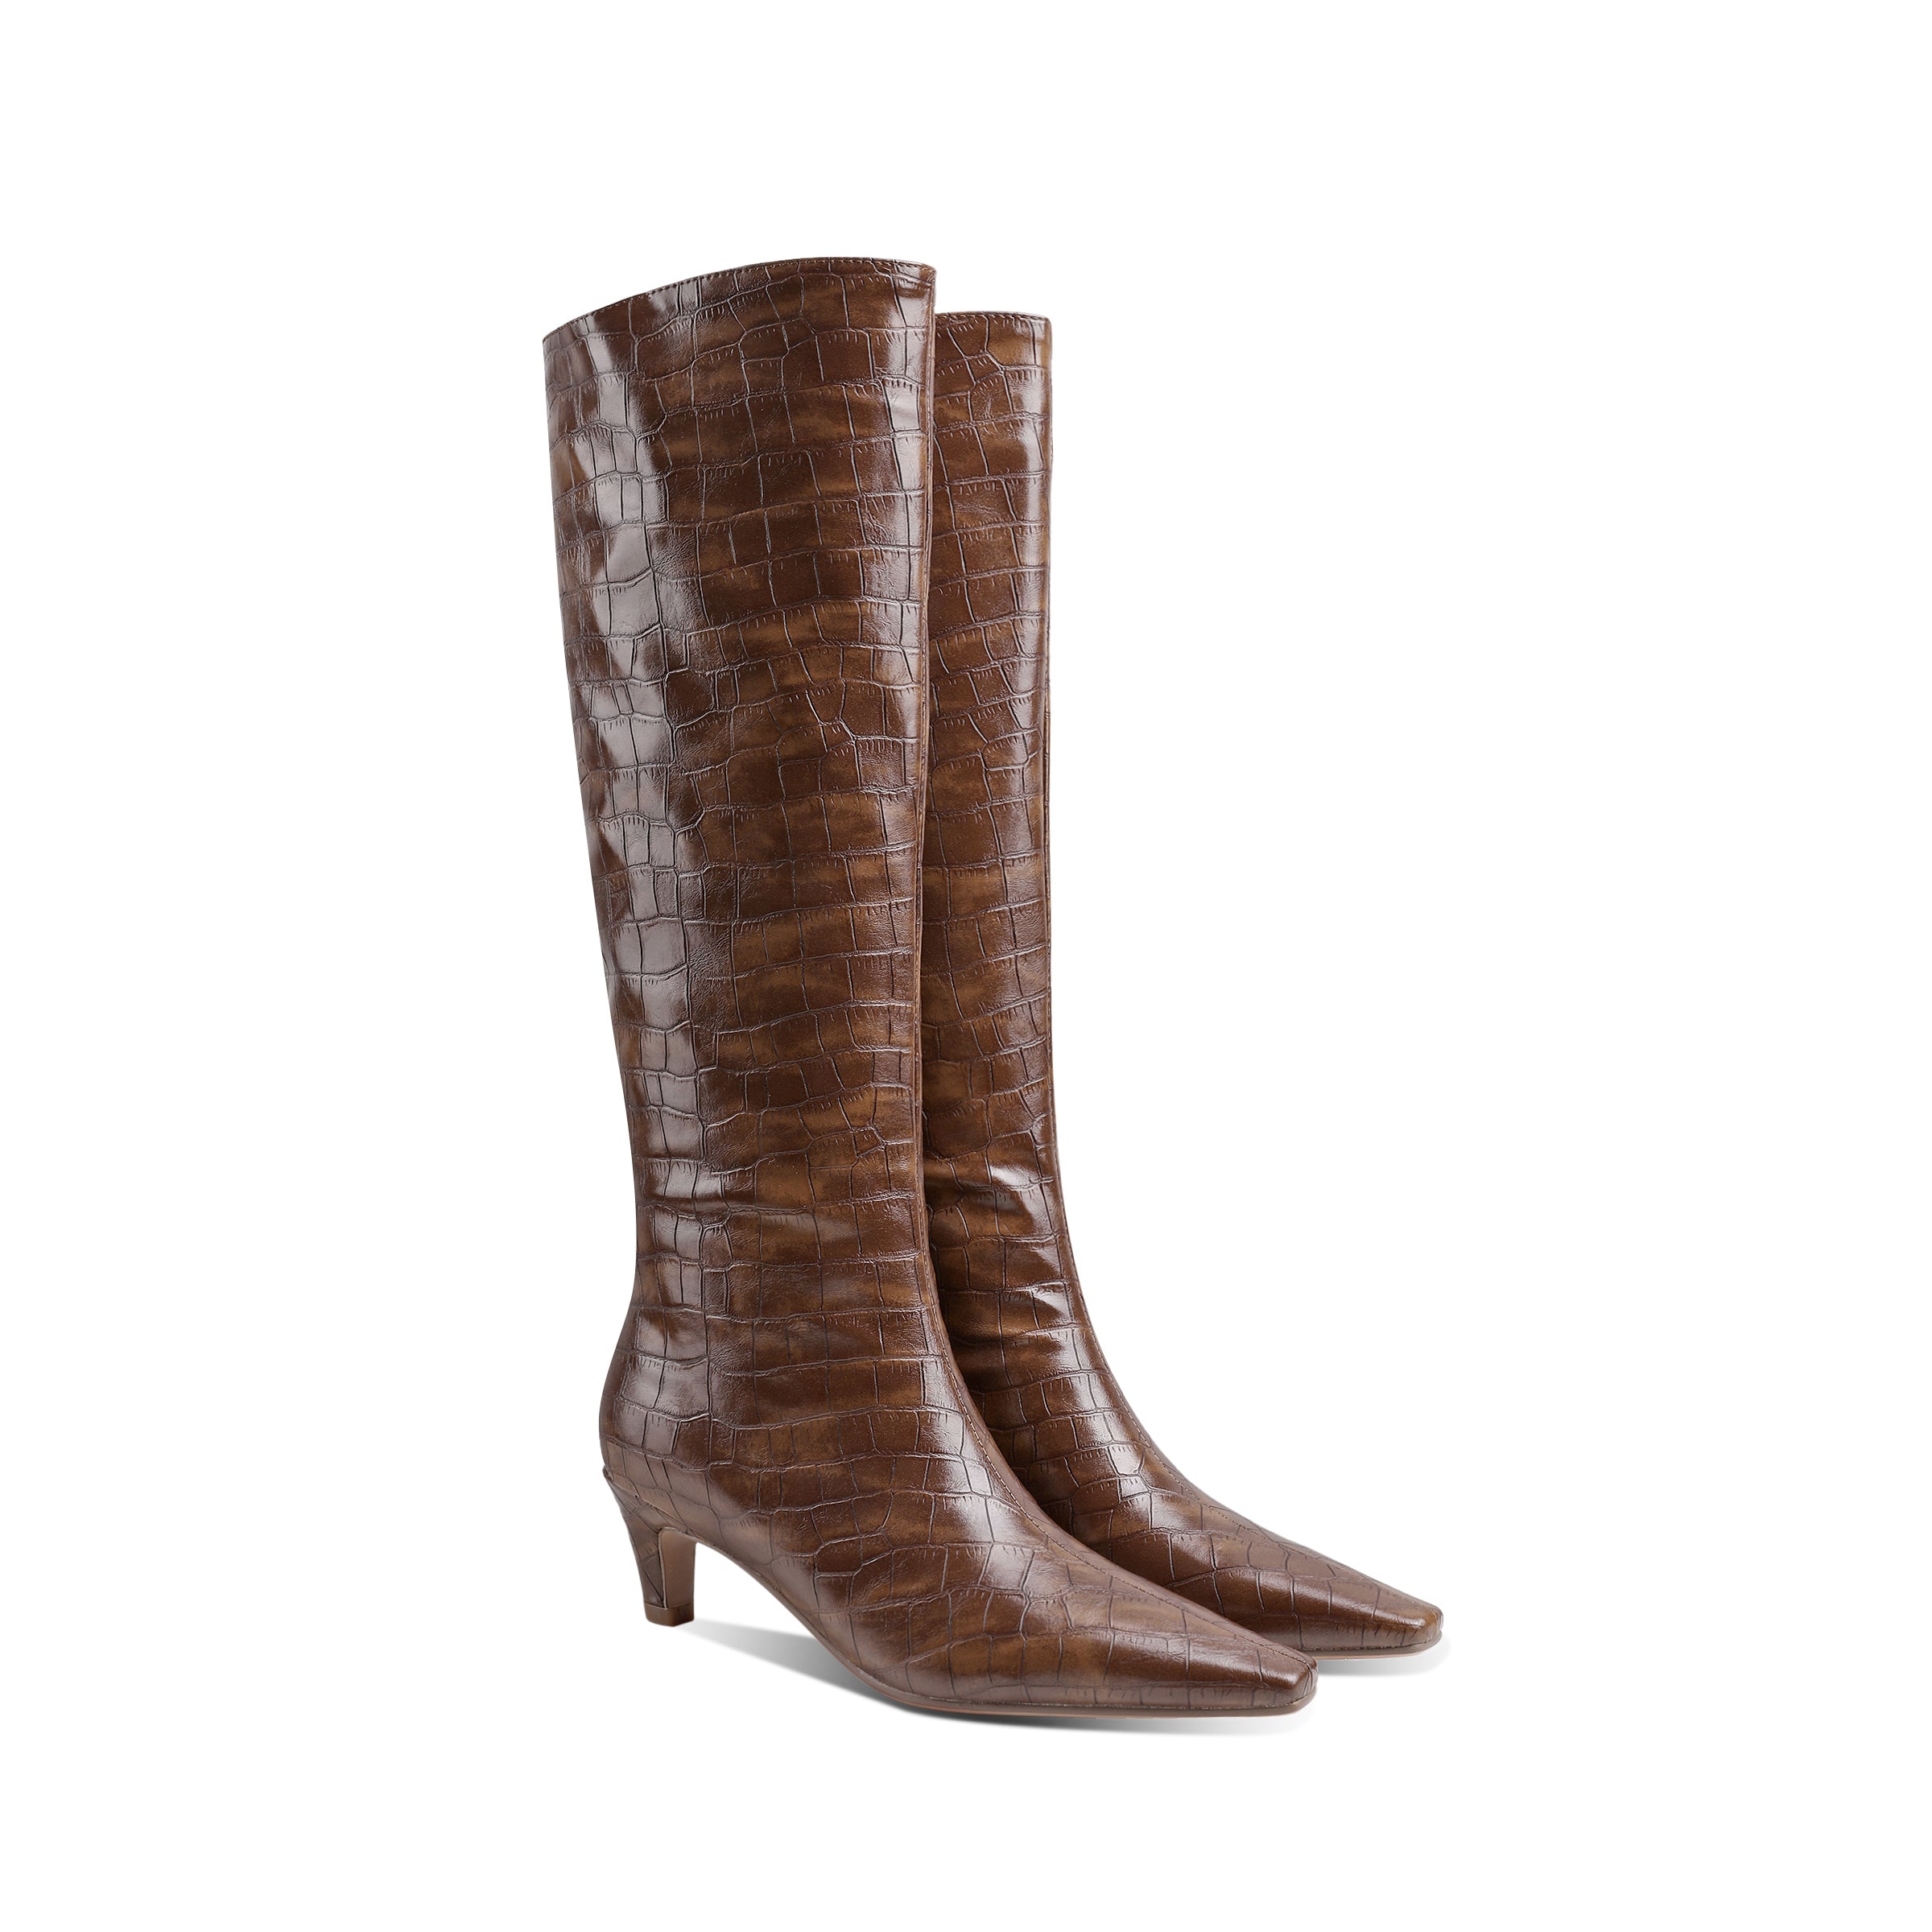 Bigsizeheels Square toe low heel boots- Brown freeshipping - bigsizeheel®-size5-size15 -All Plus Sizes Available!